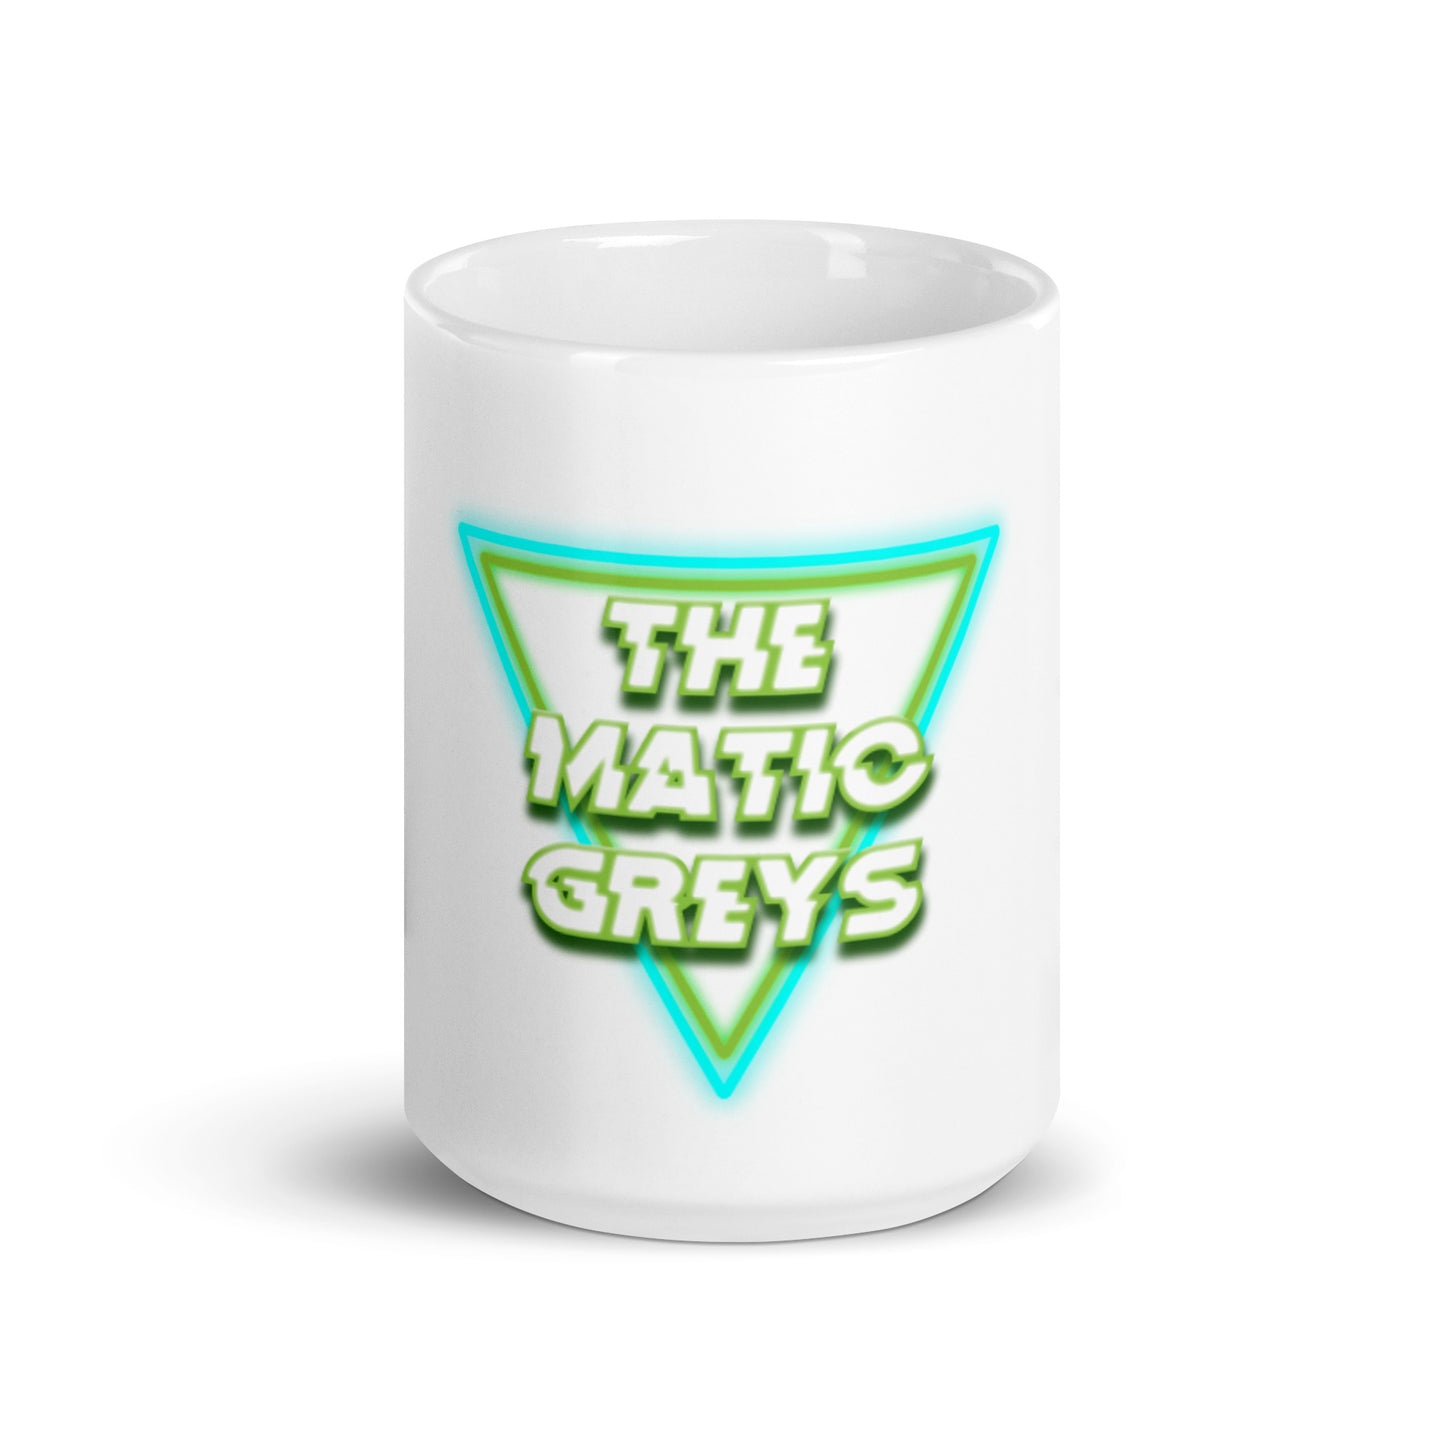 TheMaticGreys 80s Style White glossy mug